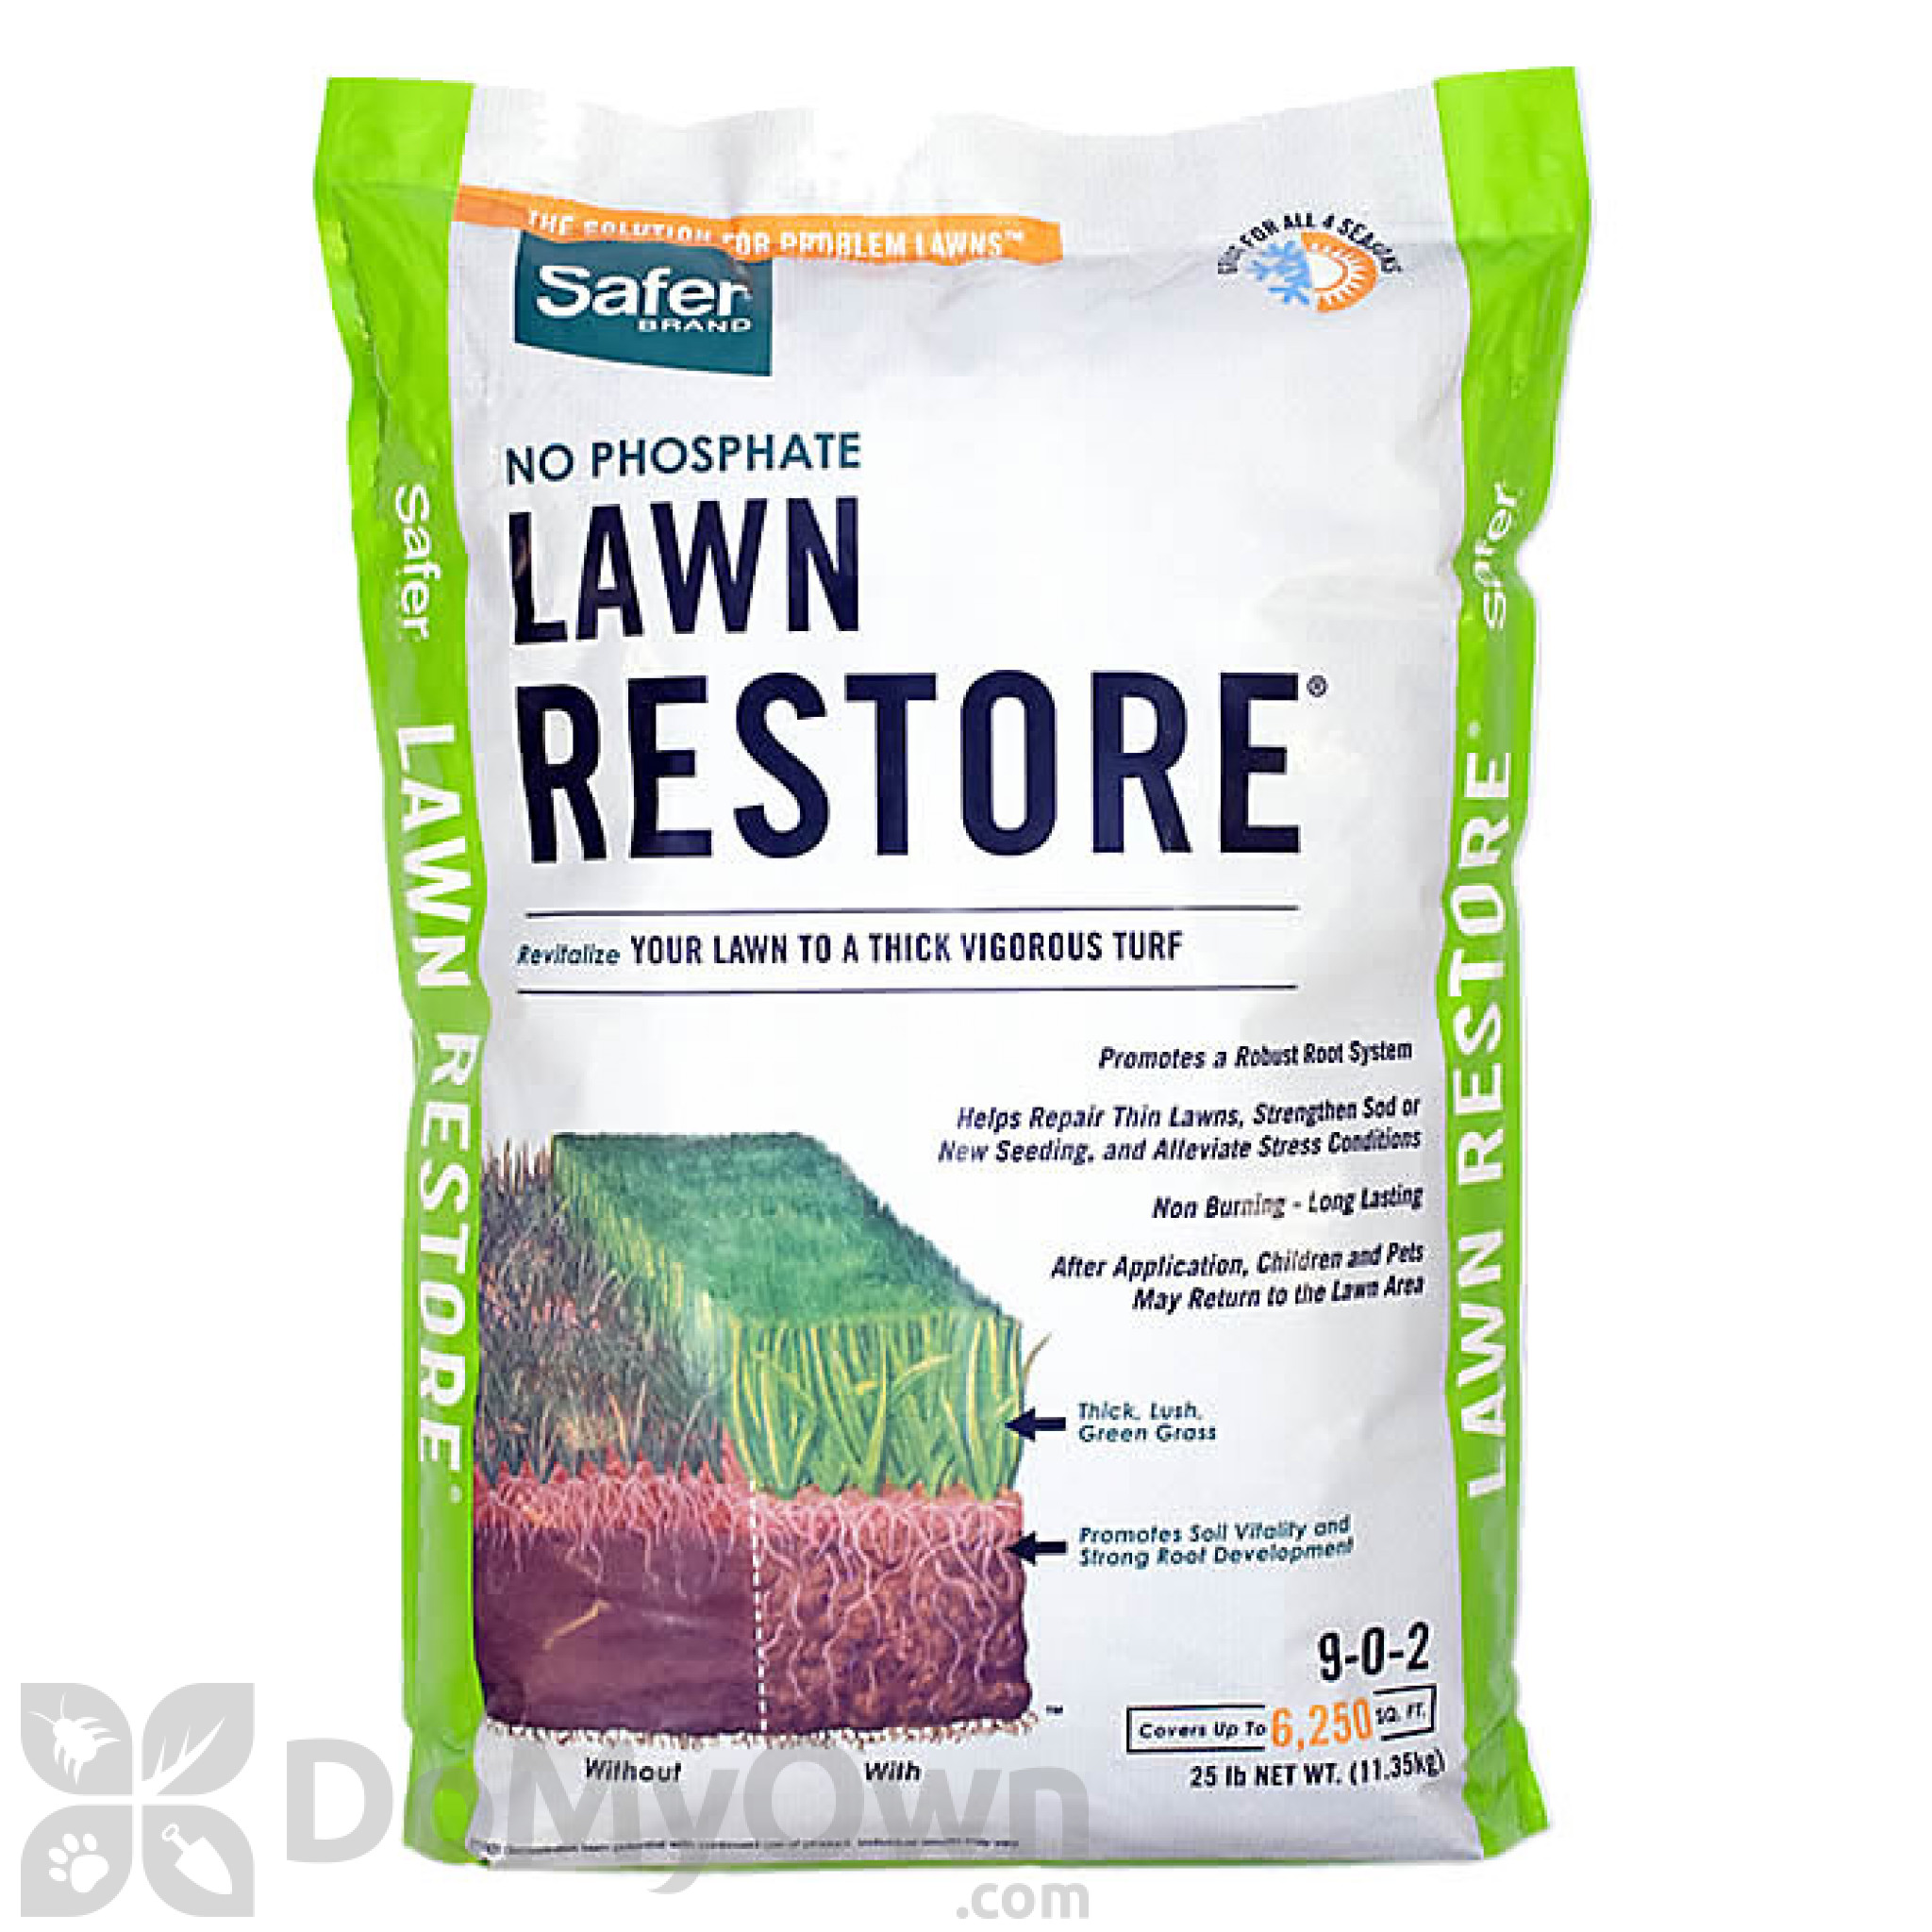 Safer Lawn Restore Fertilizer